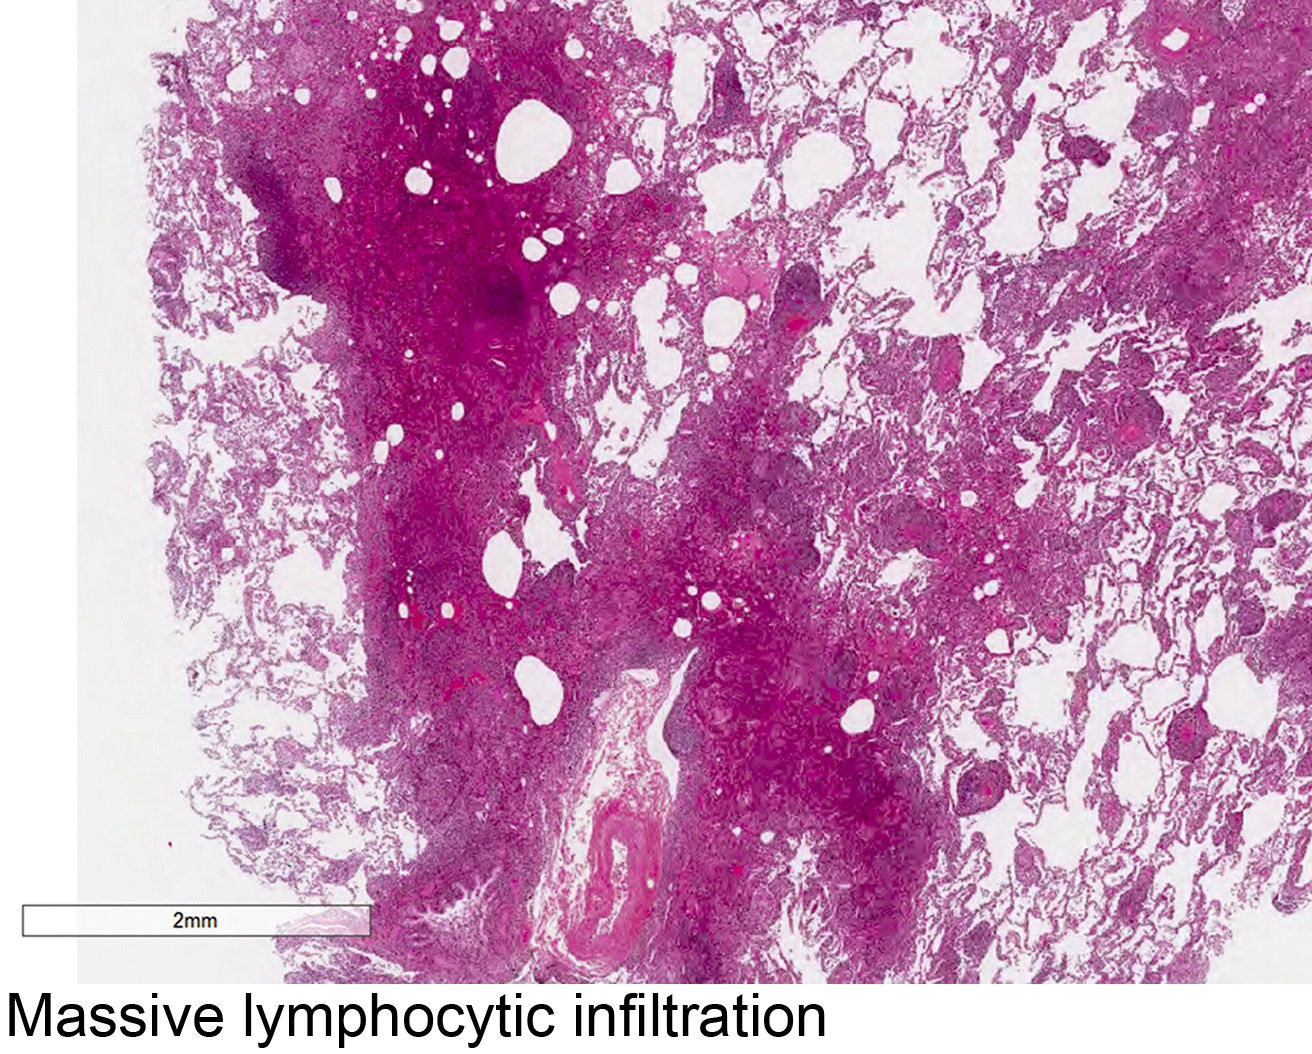 Massive lymphocytic infiltration